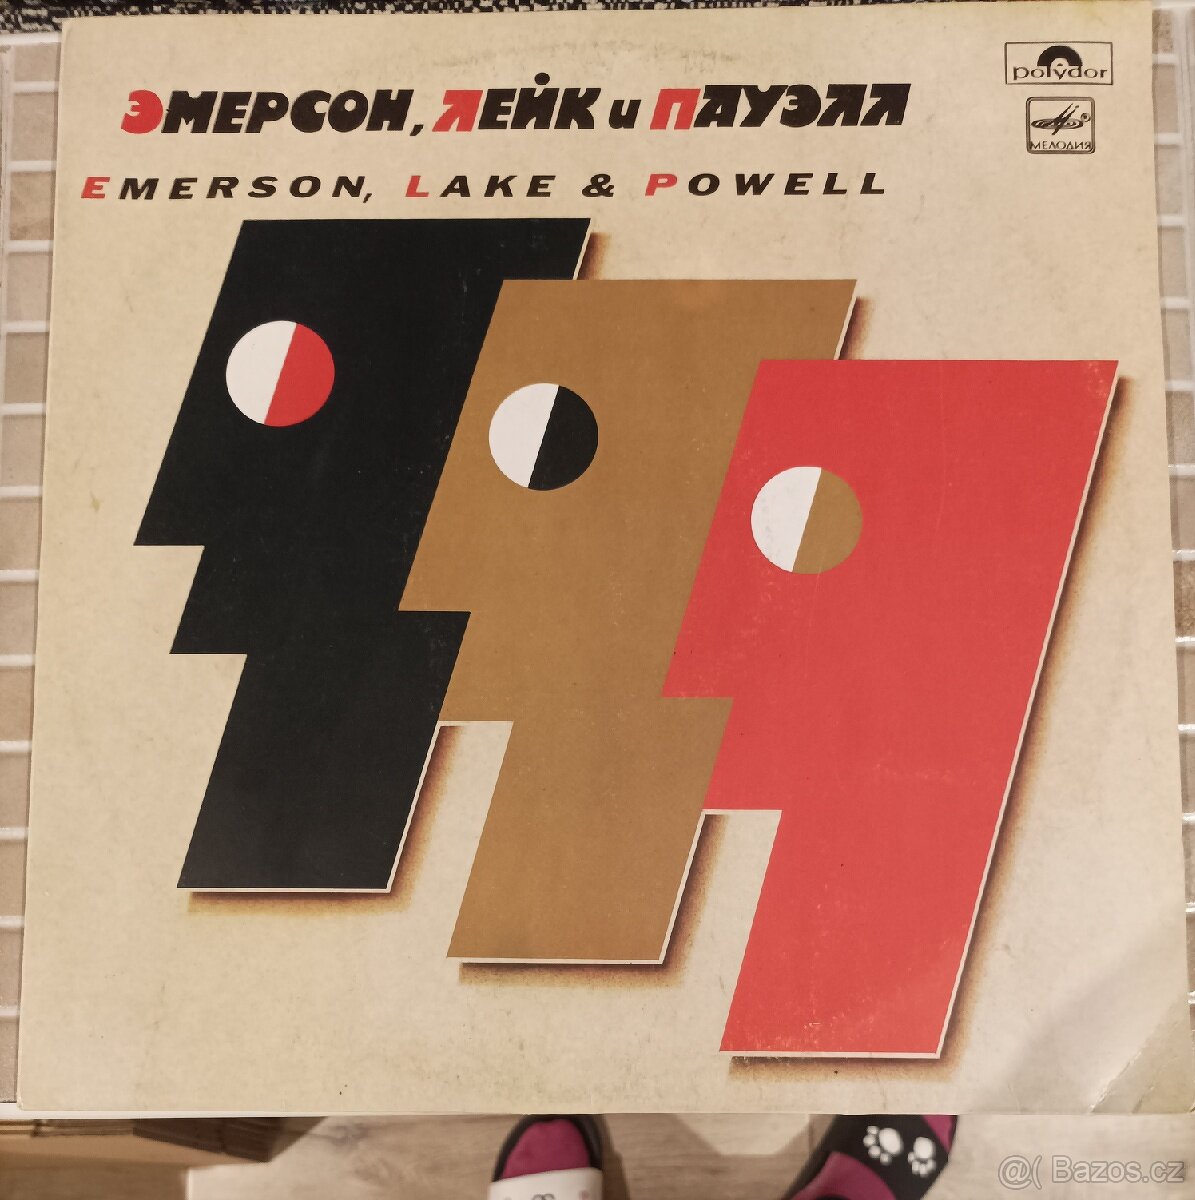 Emerson, Lake & powell